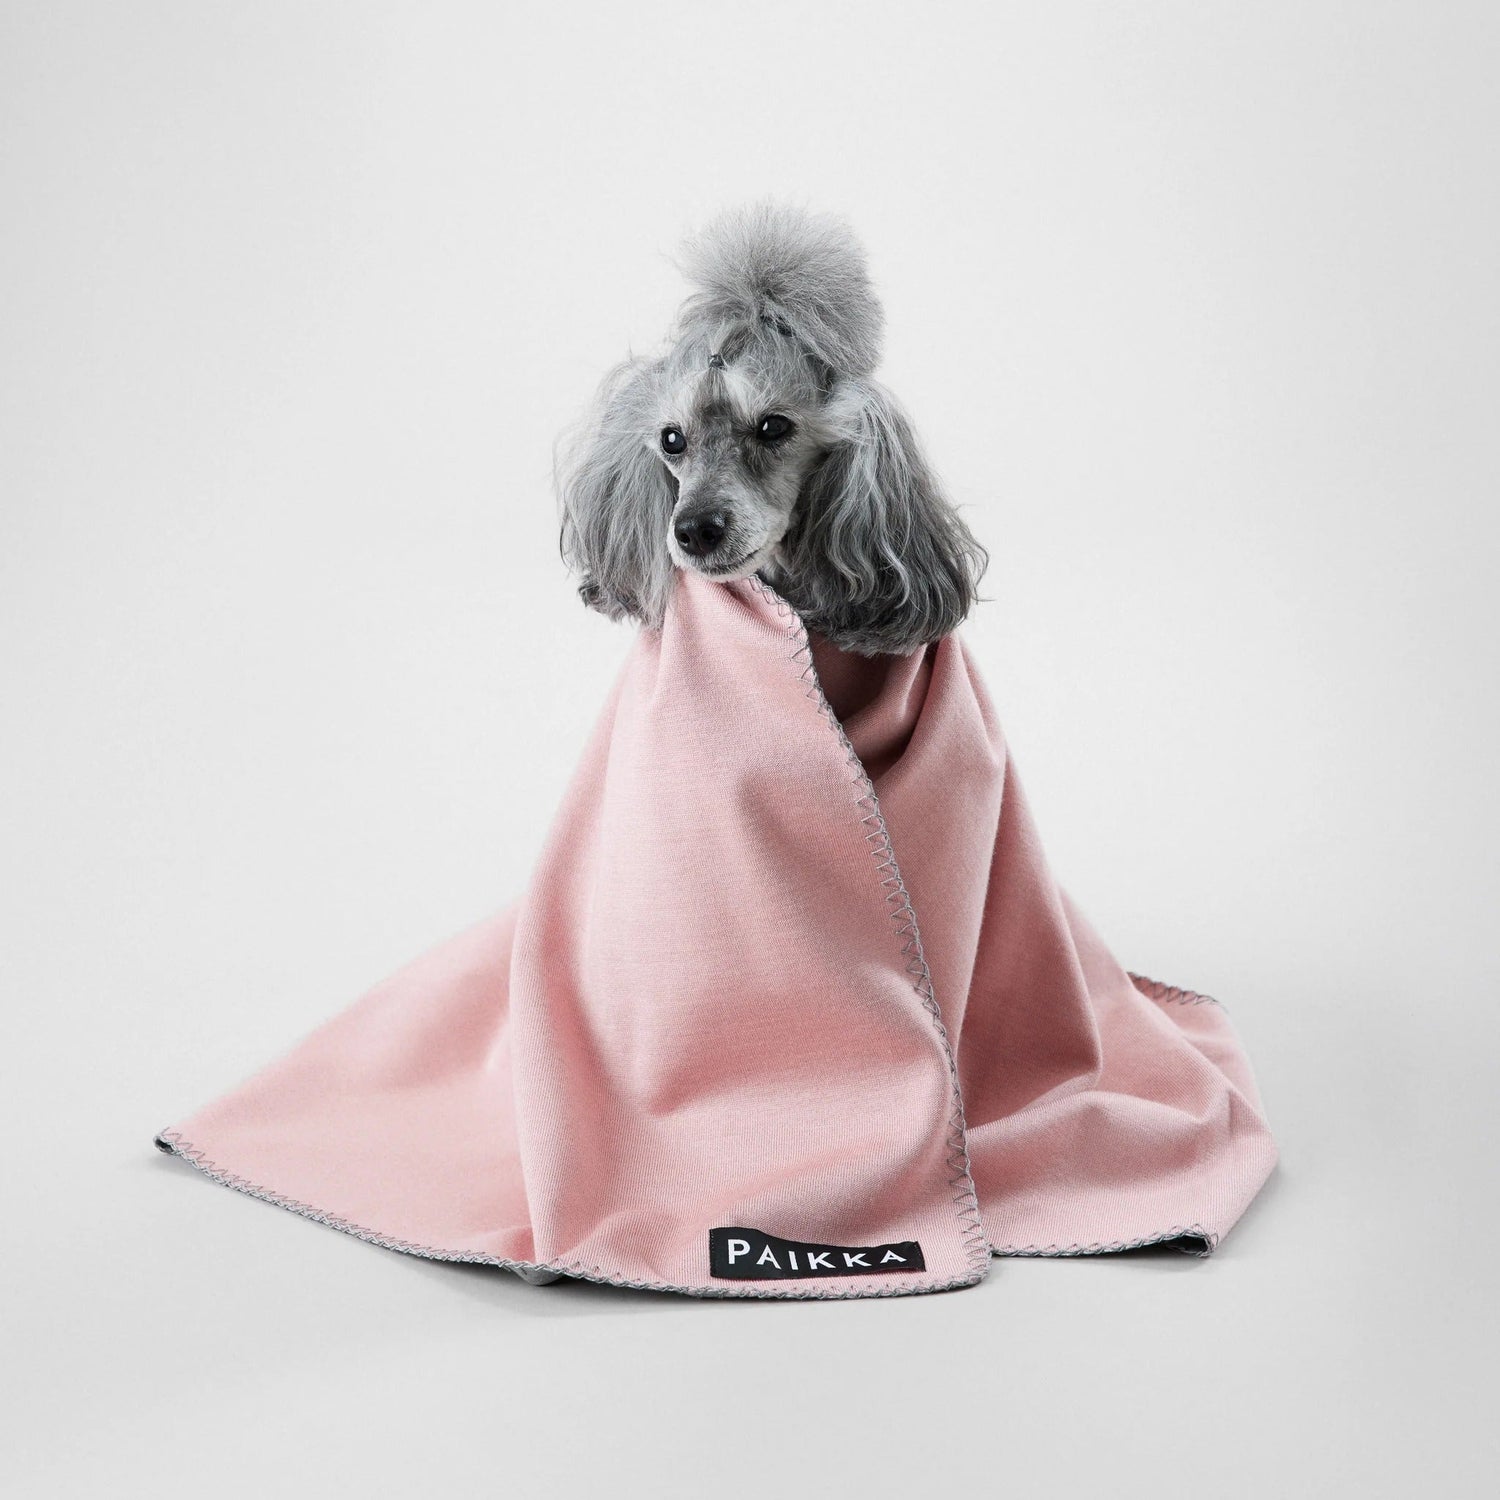 Paikka Recovery Blanket, Hundedecke - Woofshack